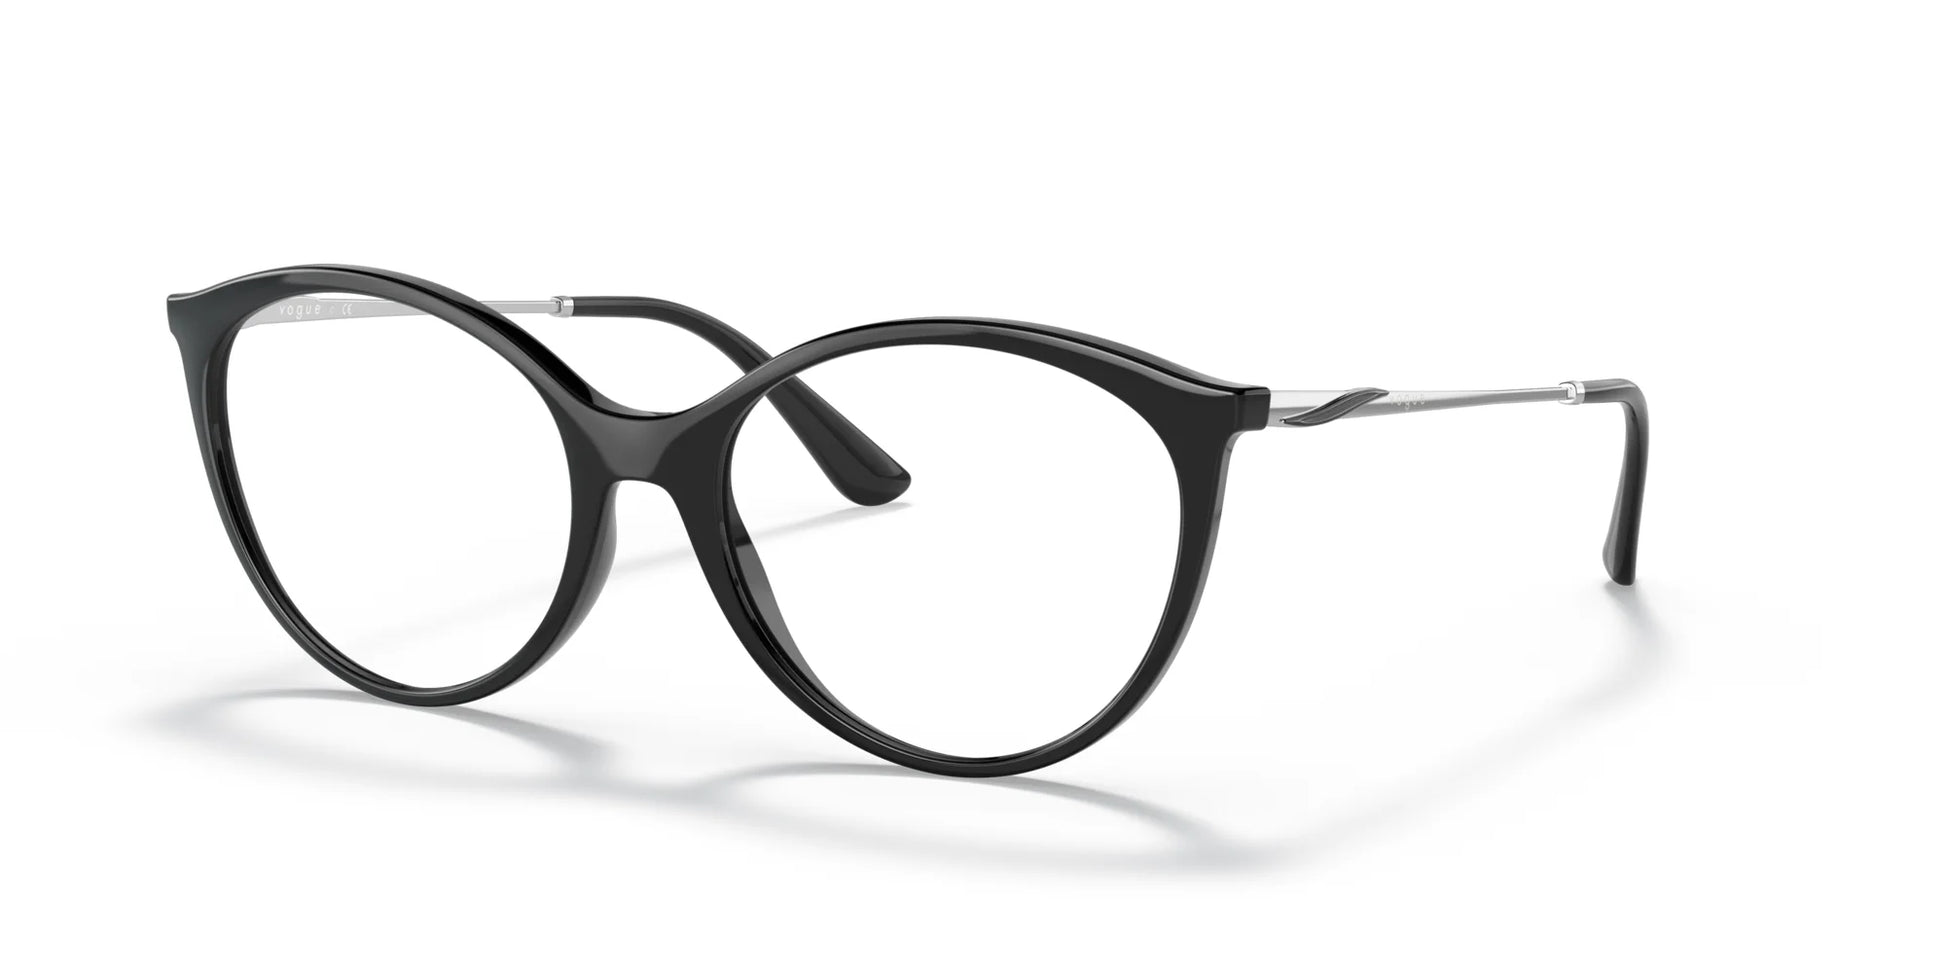 Vogue VO5387 Eyeglasses Black